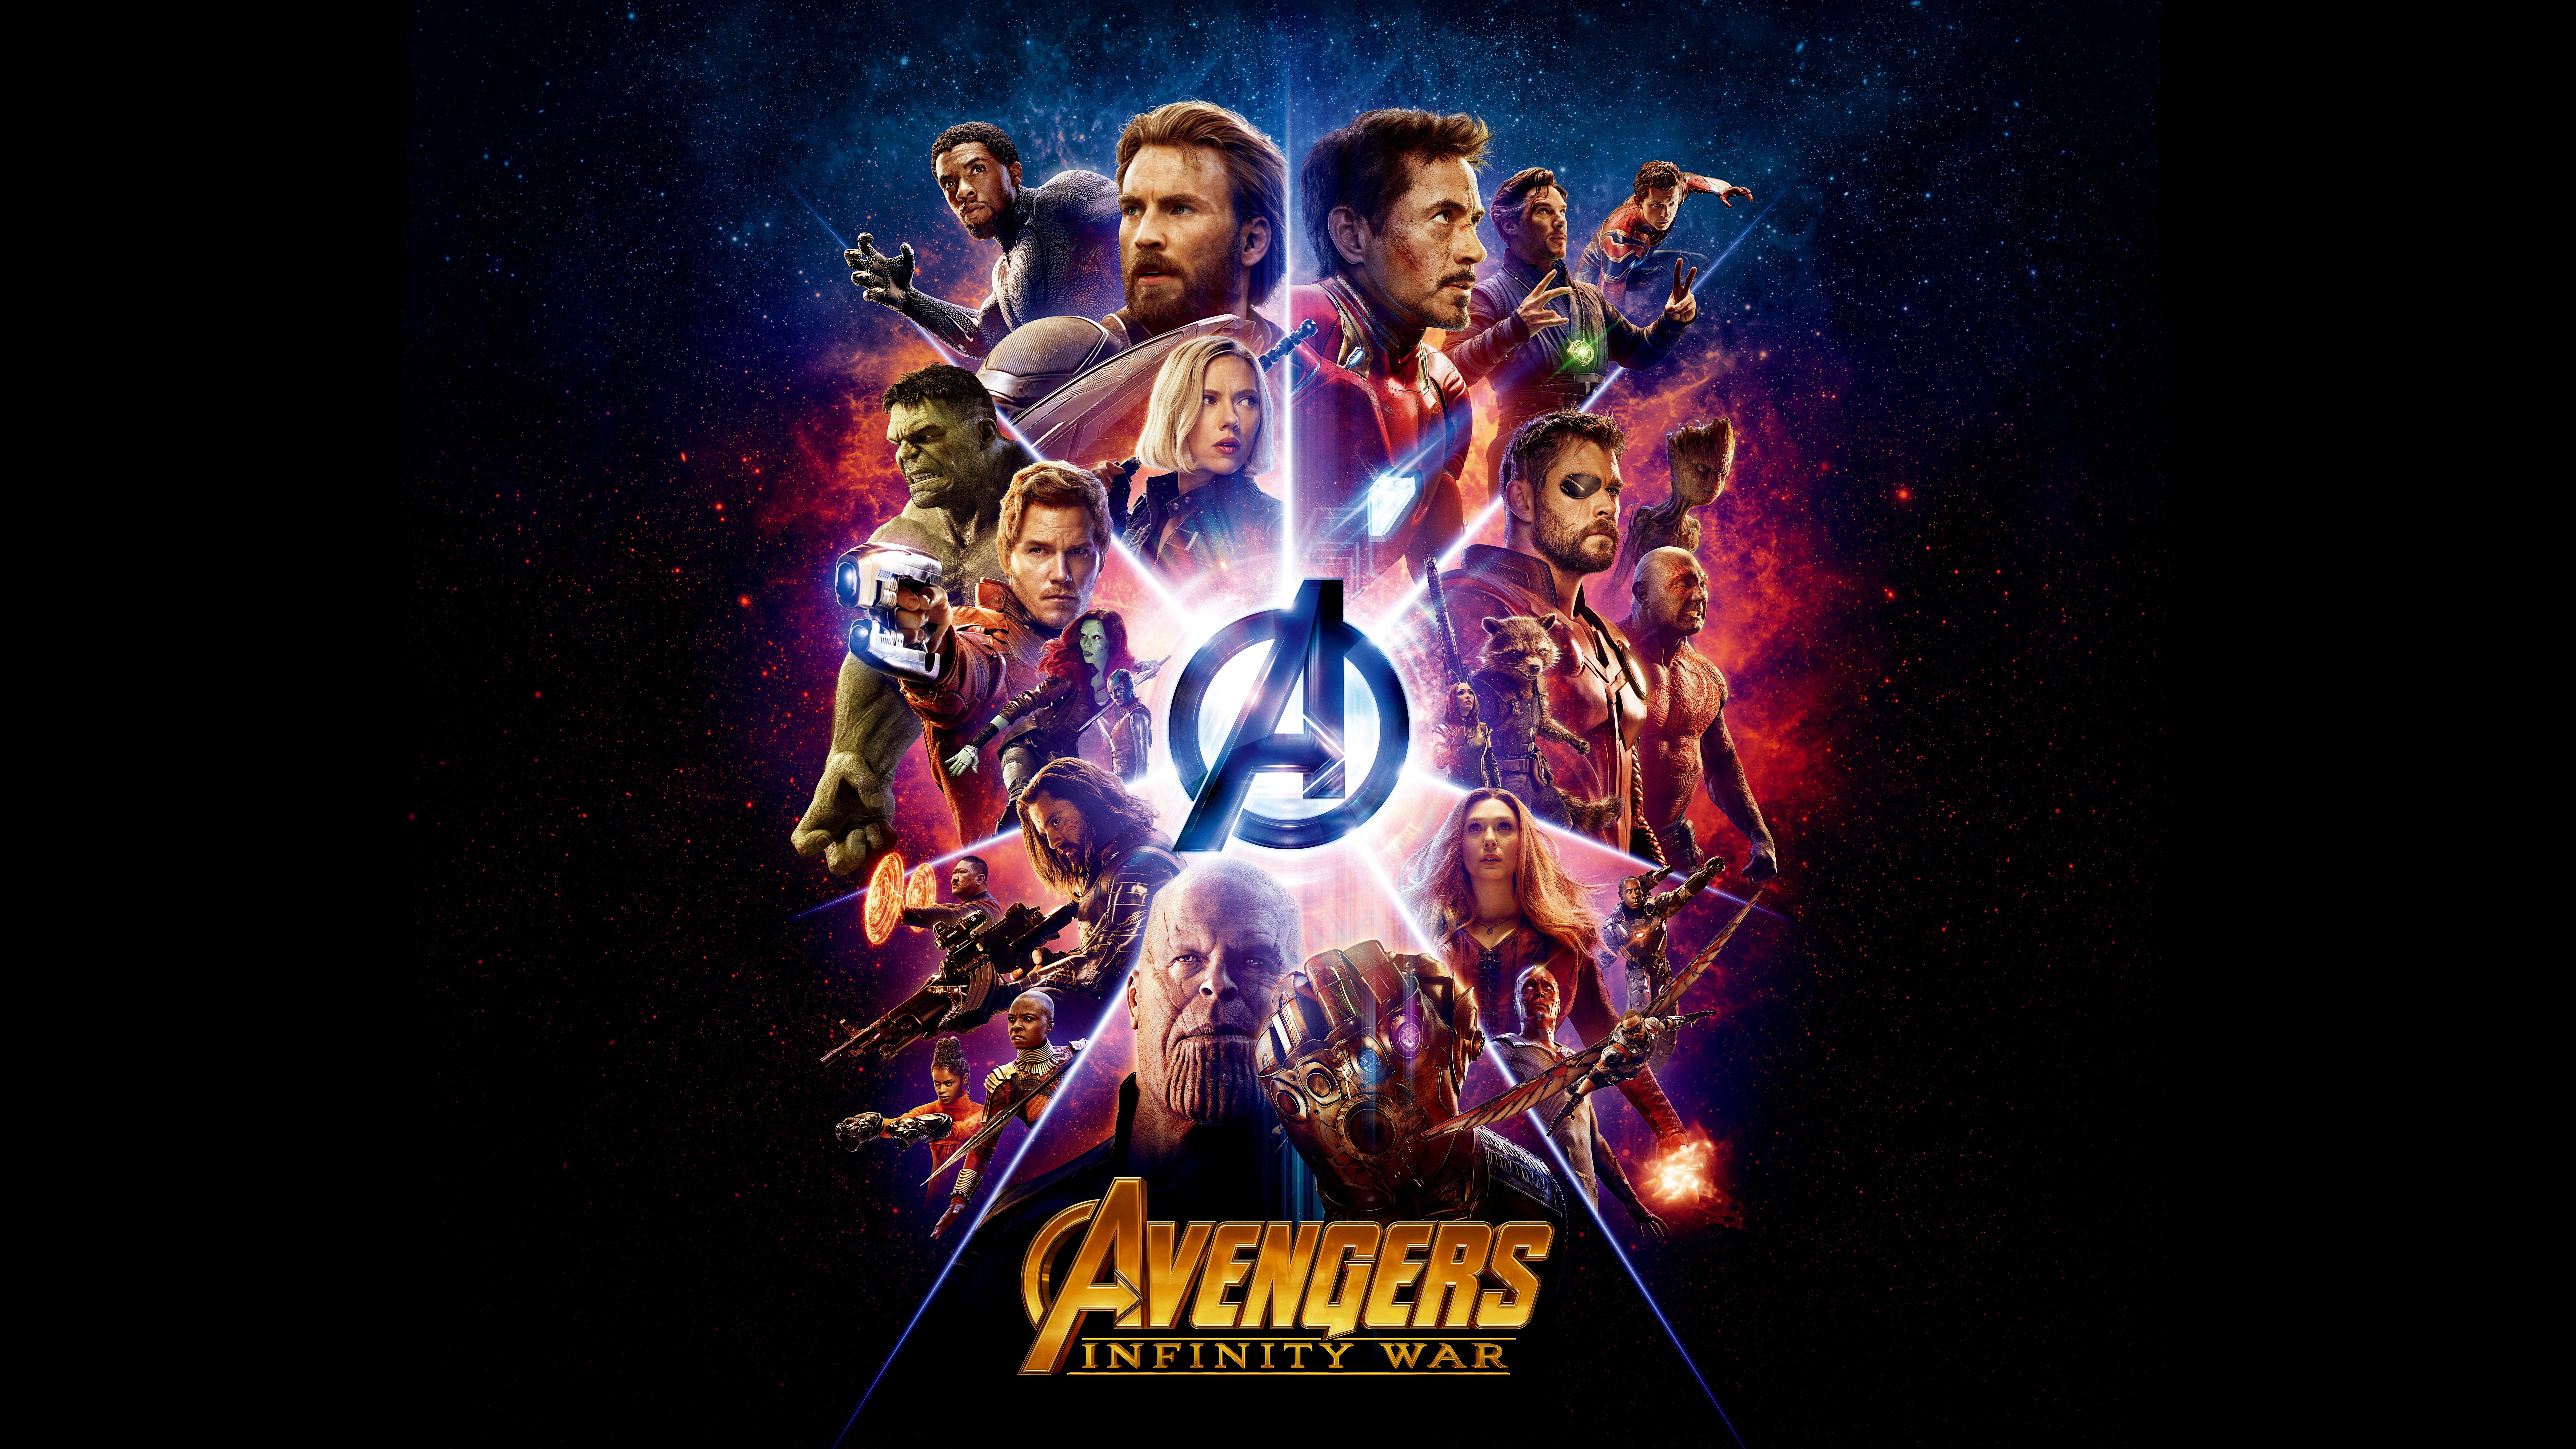 Thanos in Avengers Infinity War Wallpaper ID4197